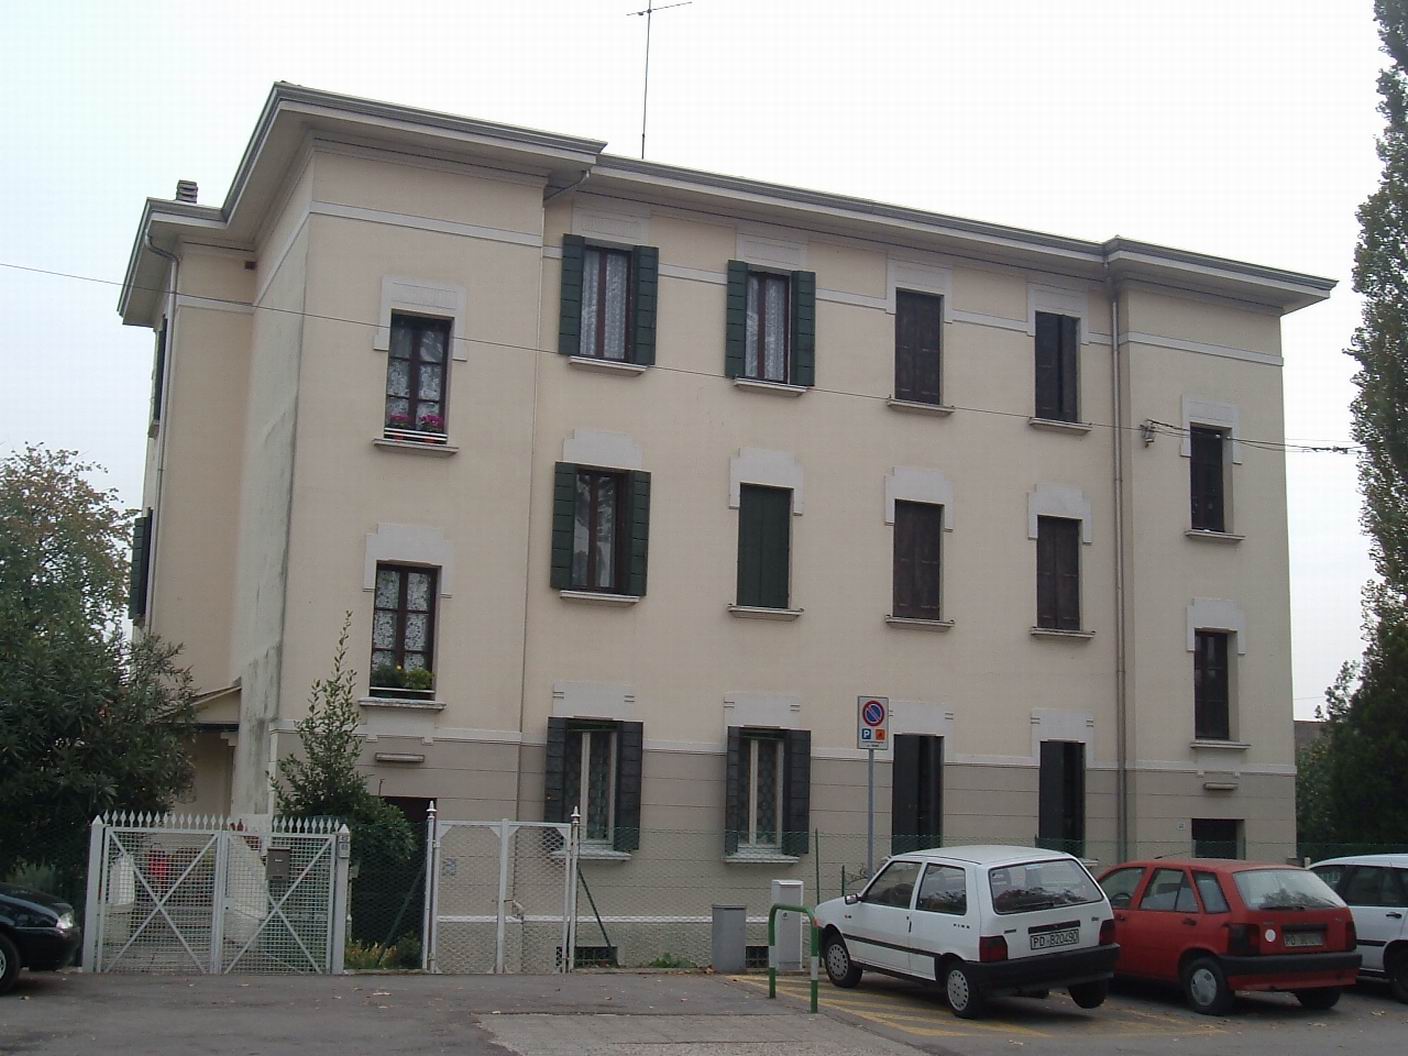 Fabbricato a blocco A.T.E.R (palazzo) - Padova (PD) 